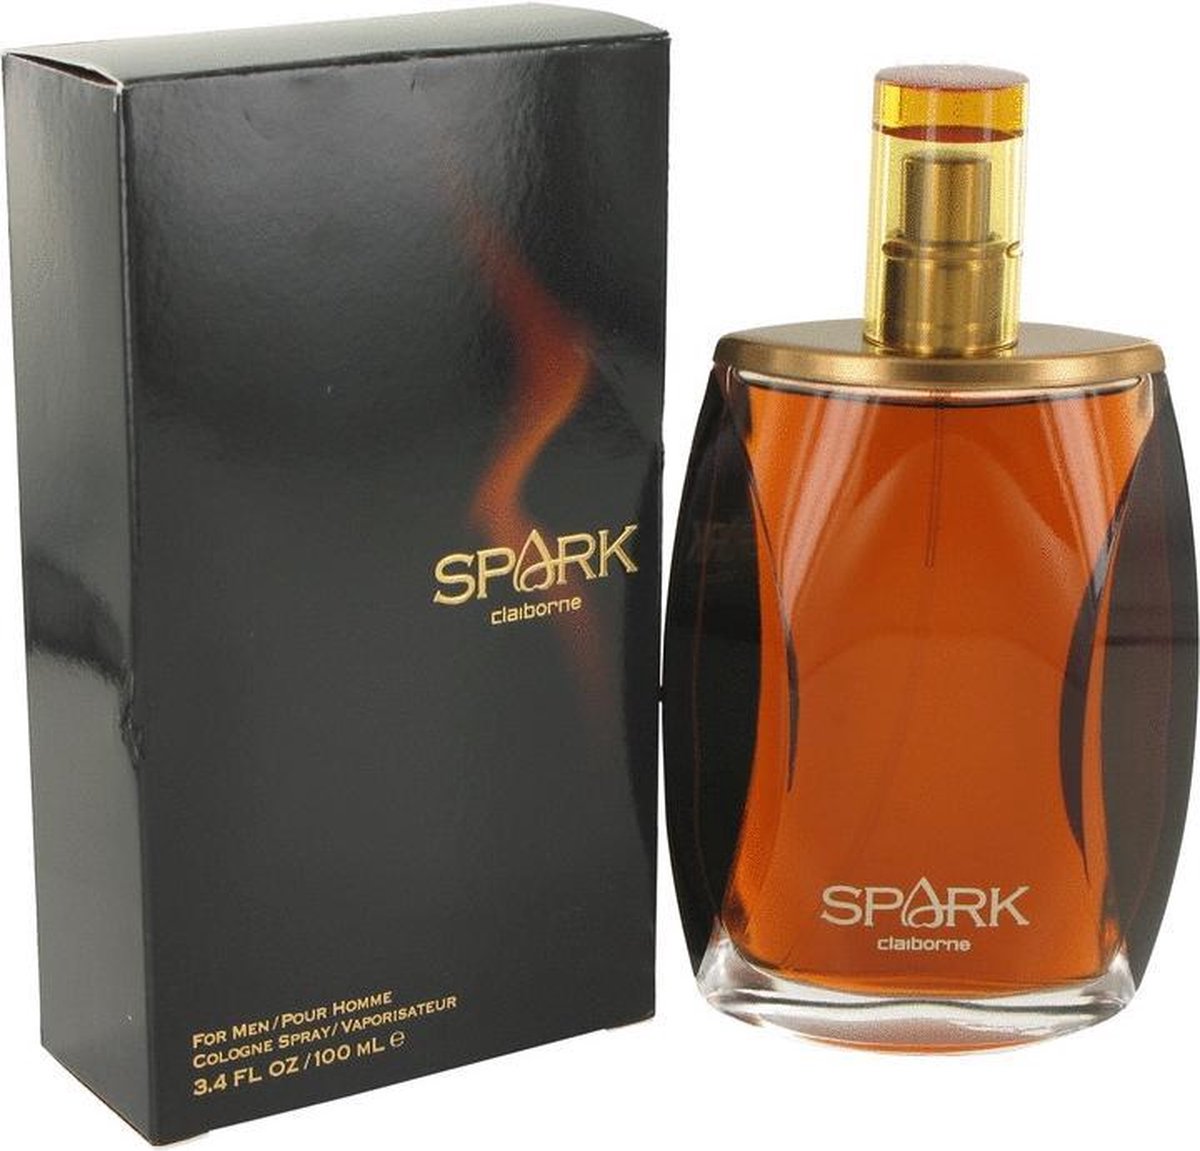 Spark by Liz Claiborne 100 ml - Eau De Cologne Spray